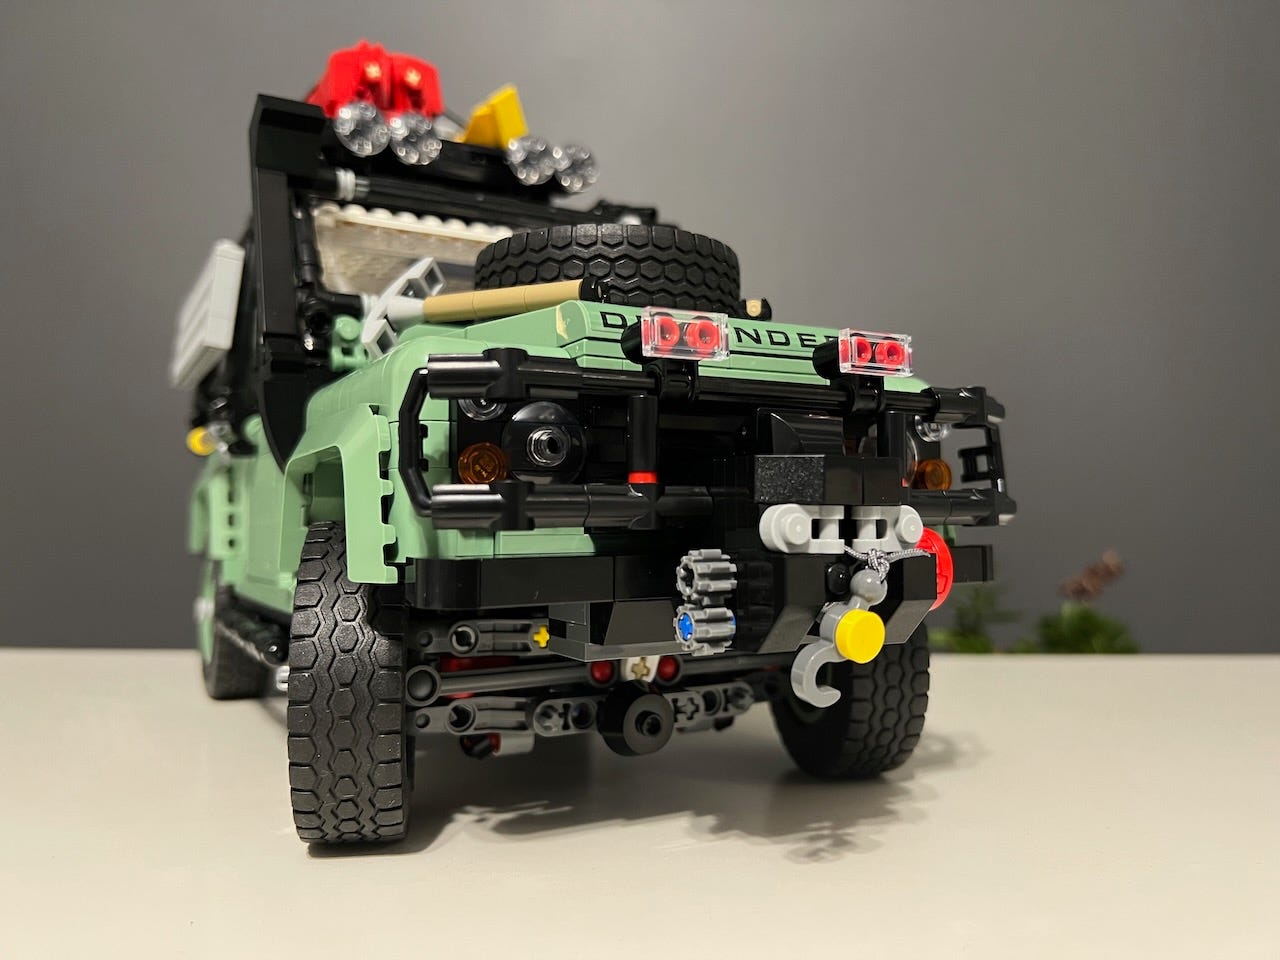 Meet The Best Creator Expert Vehicle LEGO Has Ever Made